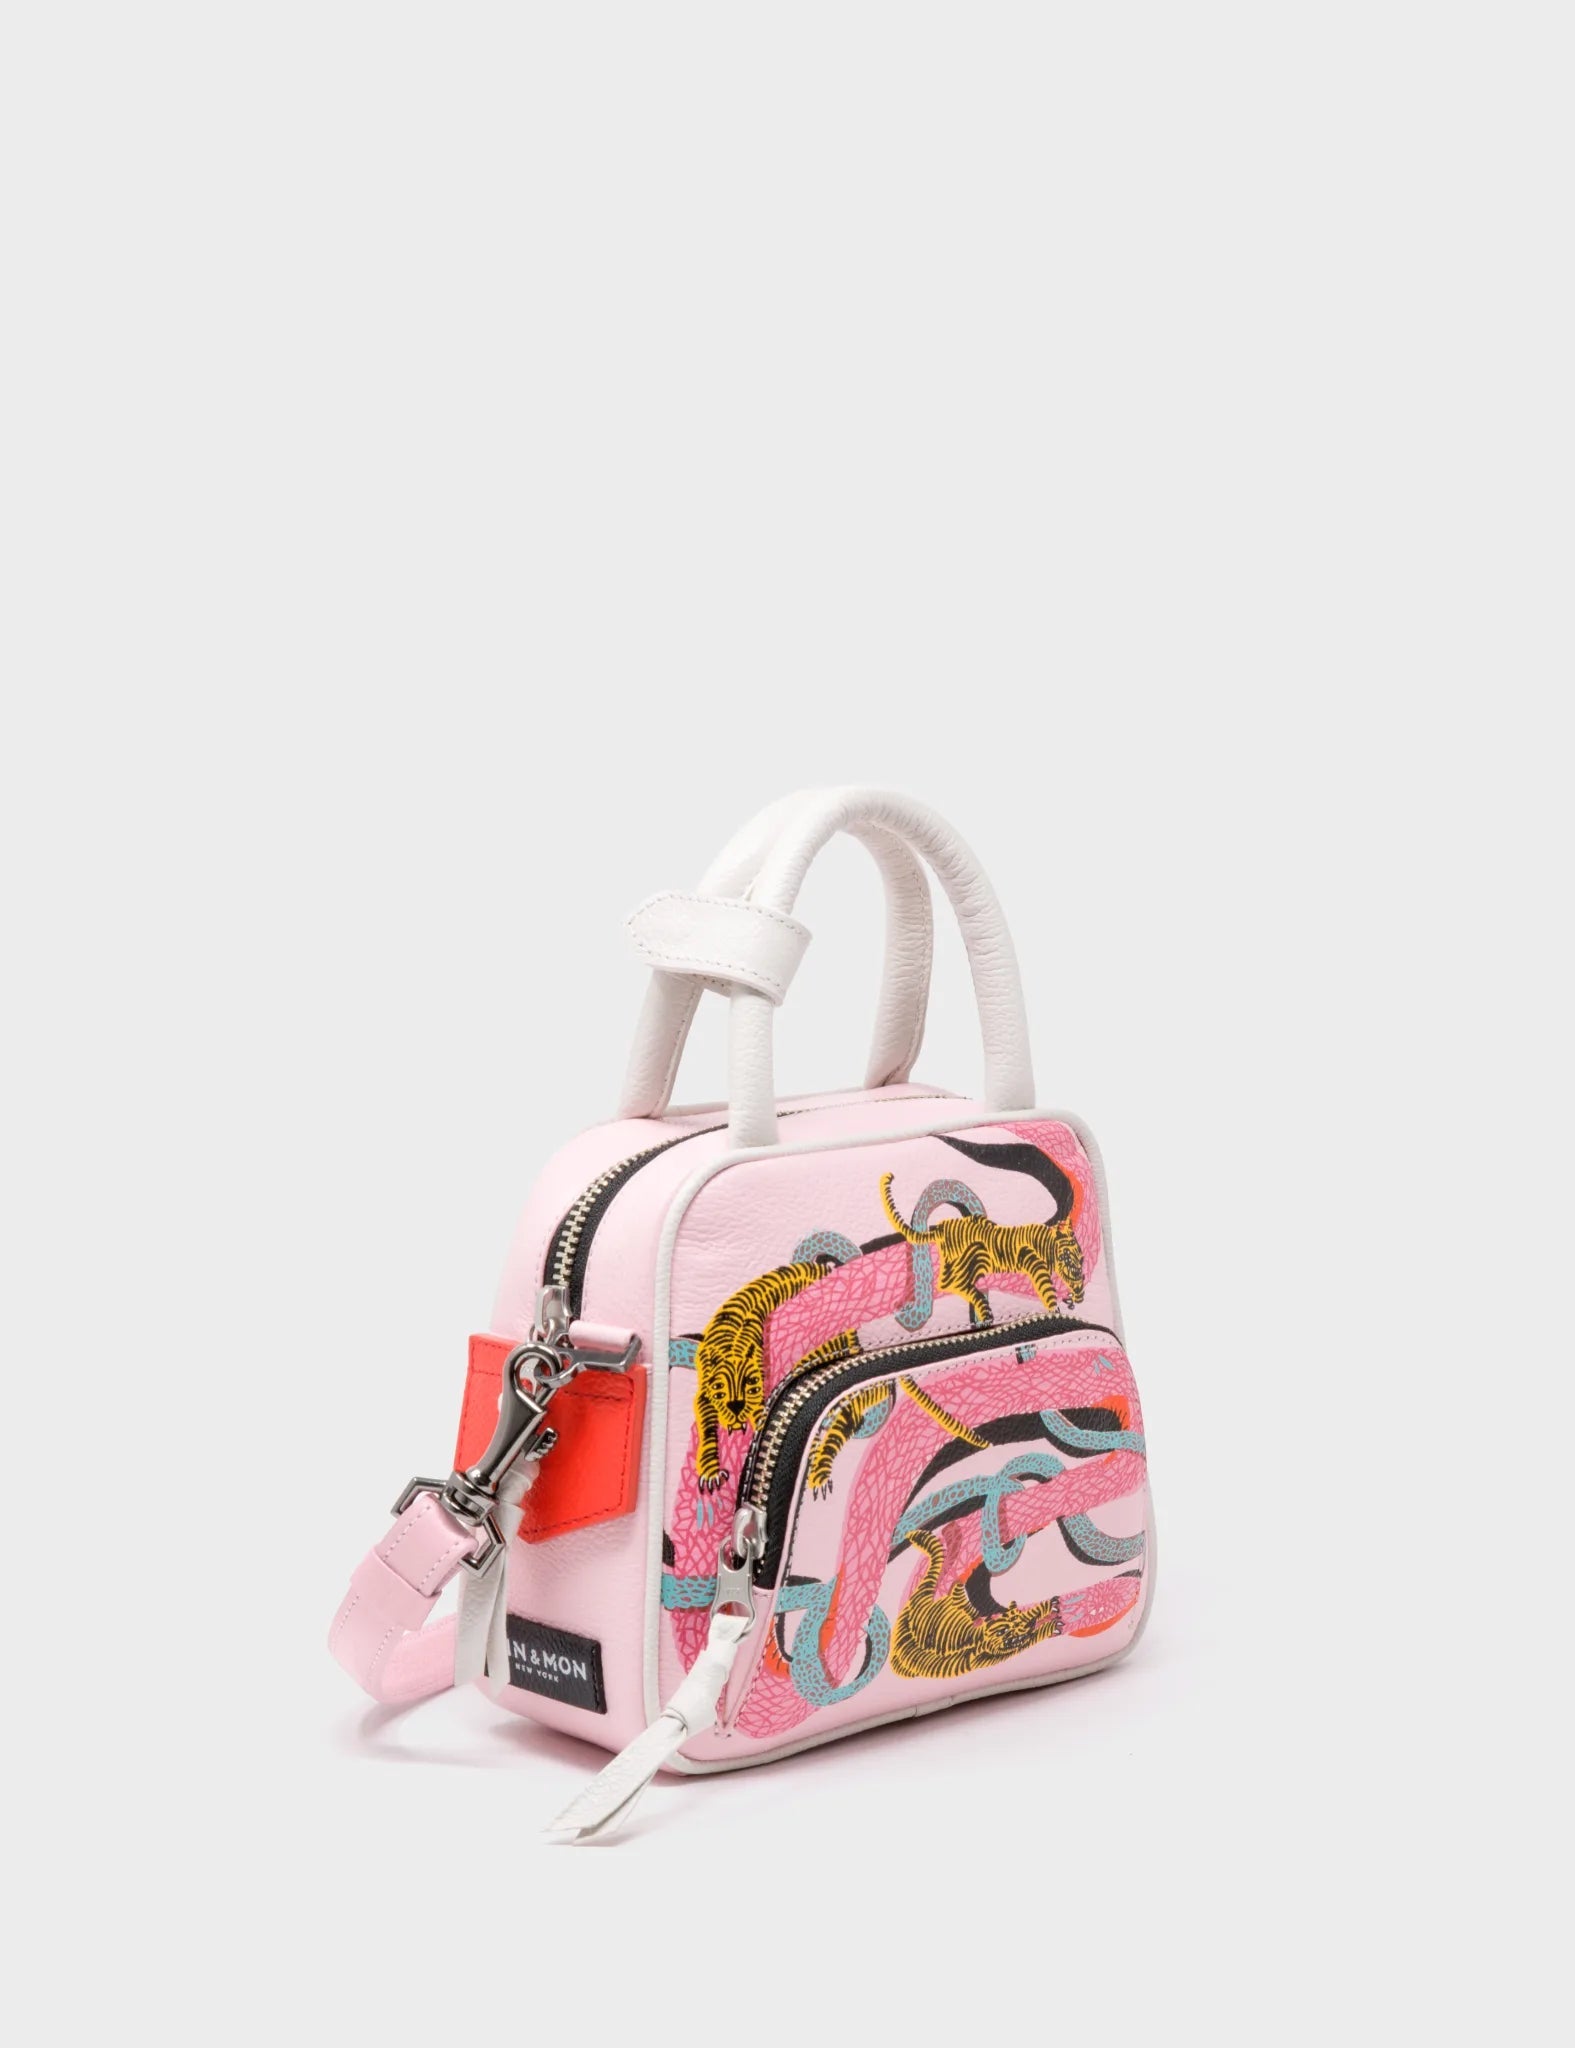 Small Crossbody Parfait Pink Leather Bag - Tangled Tiger & Snake Print Design